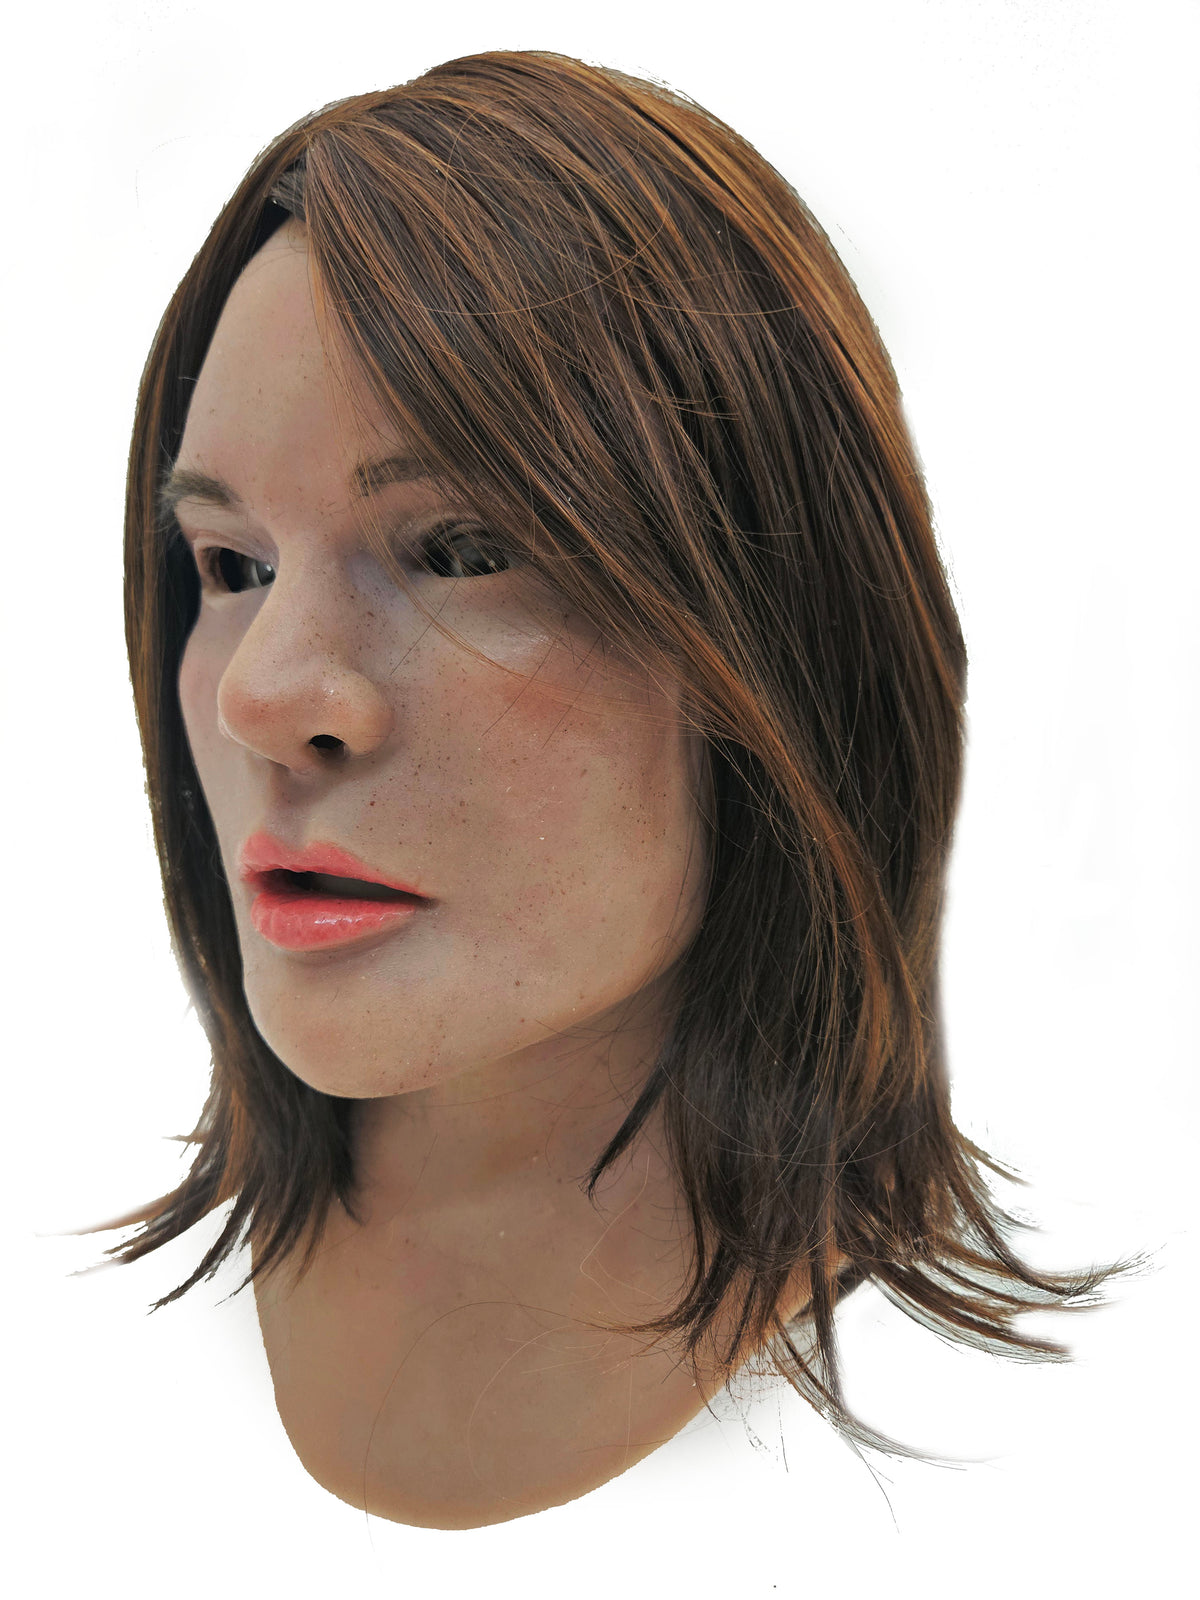 MM402 Denise - SimMan Facial Overlay